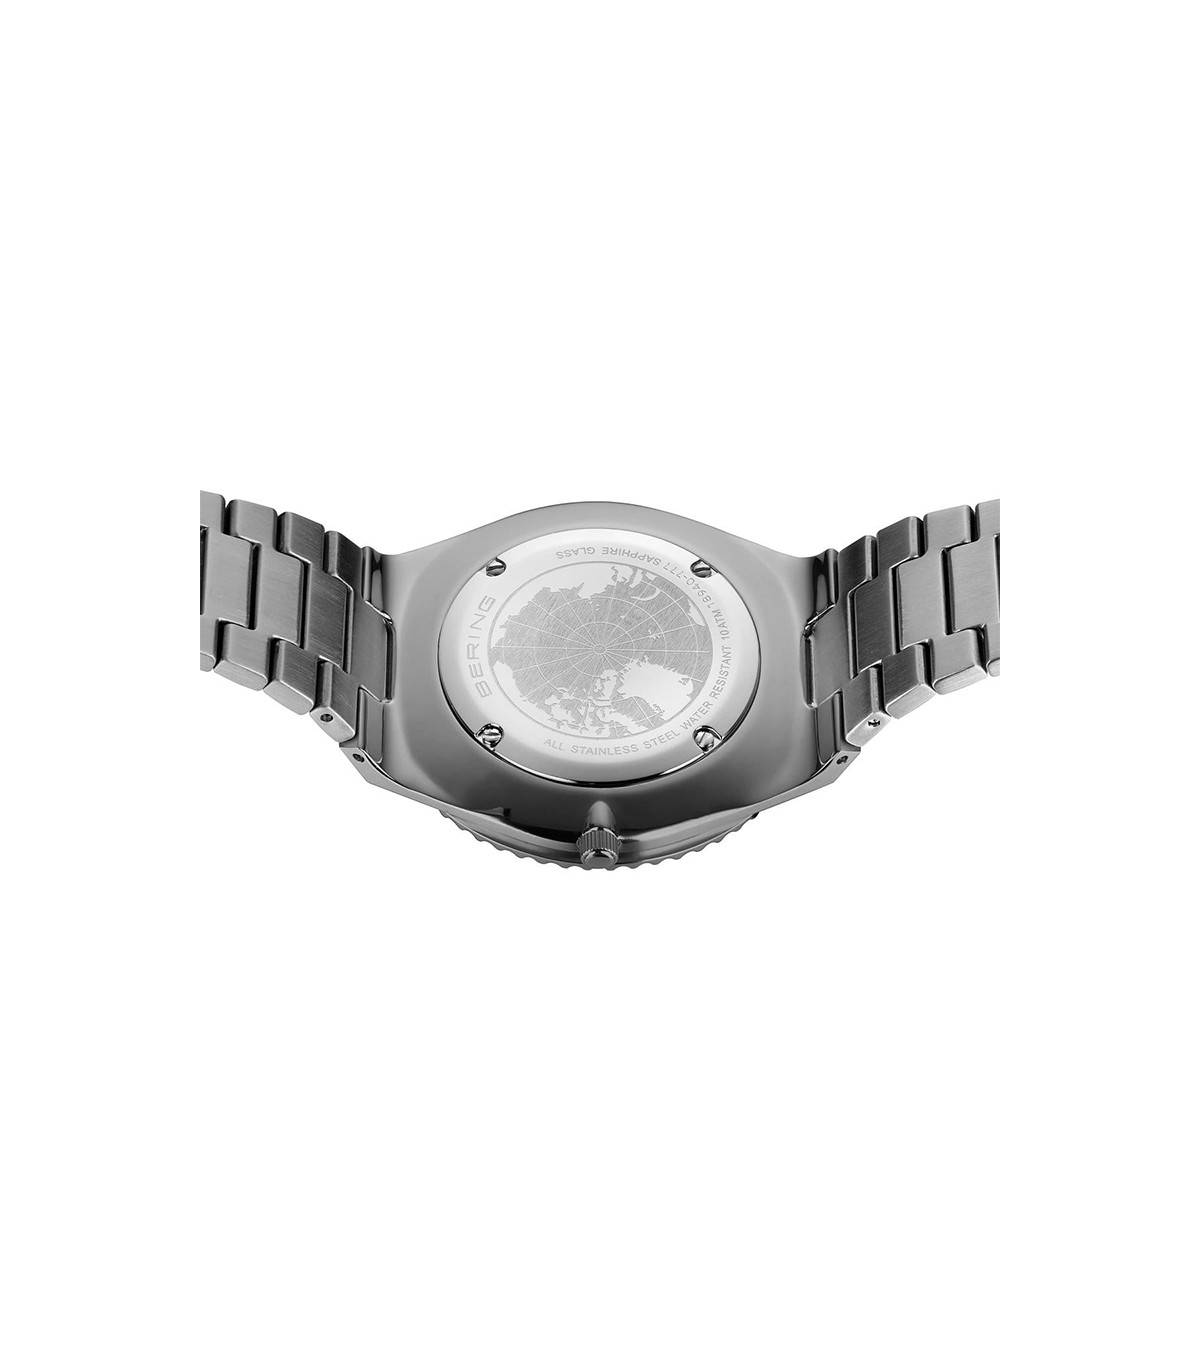 Marathon GSAR Arctic] Tool Watch Perfection : r/Watches